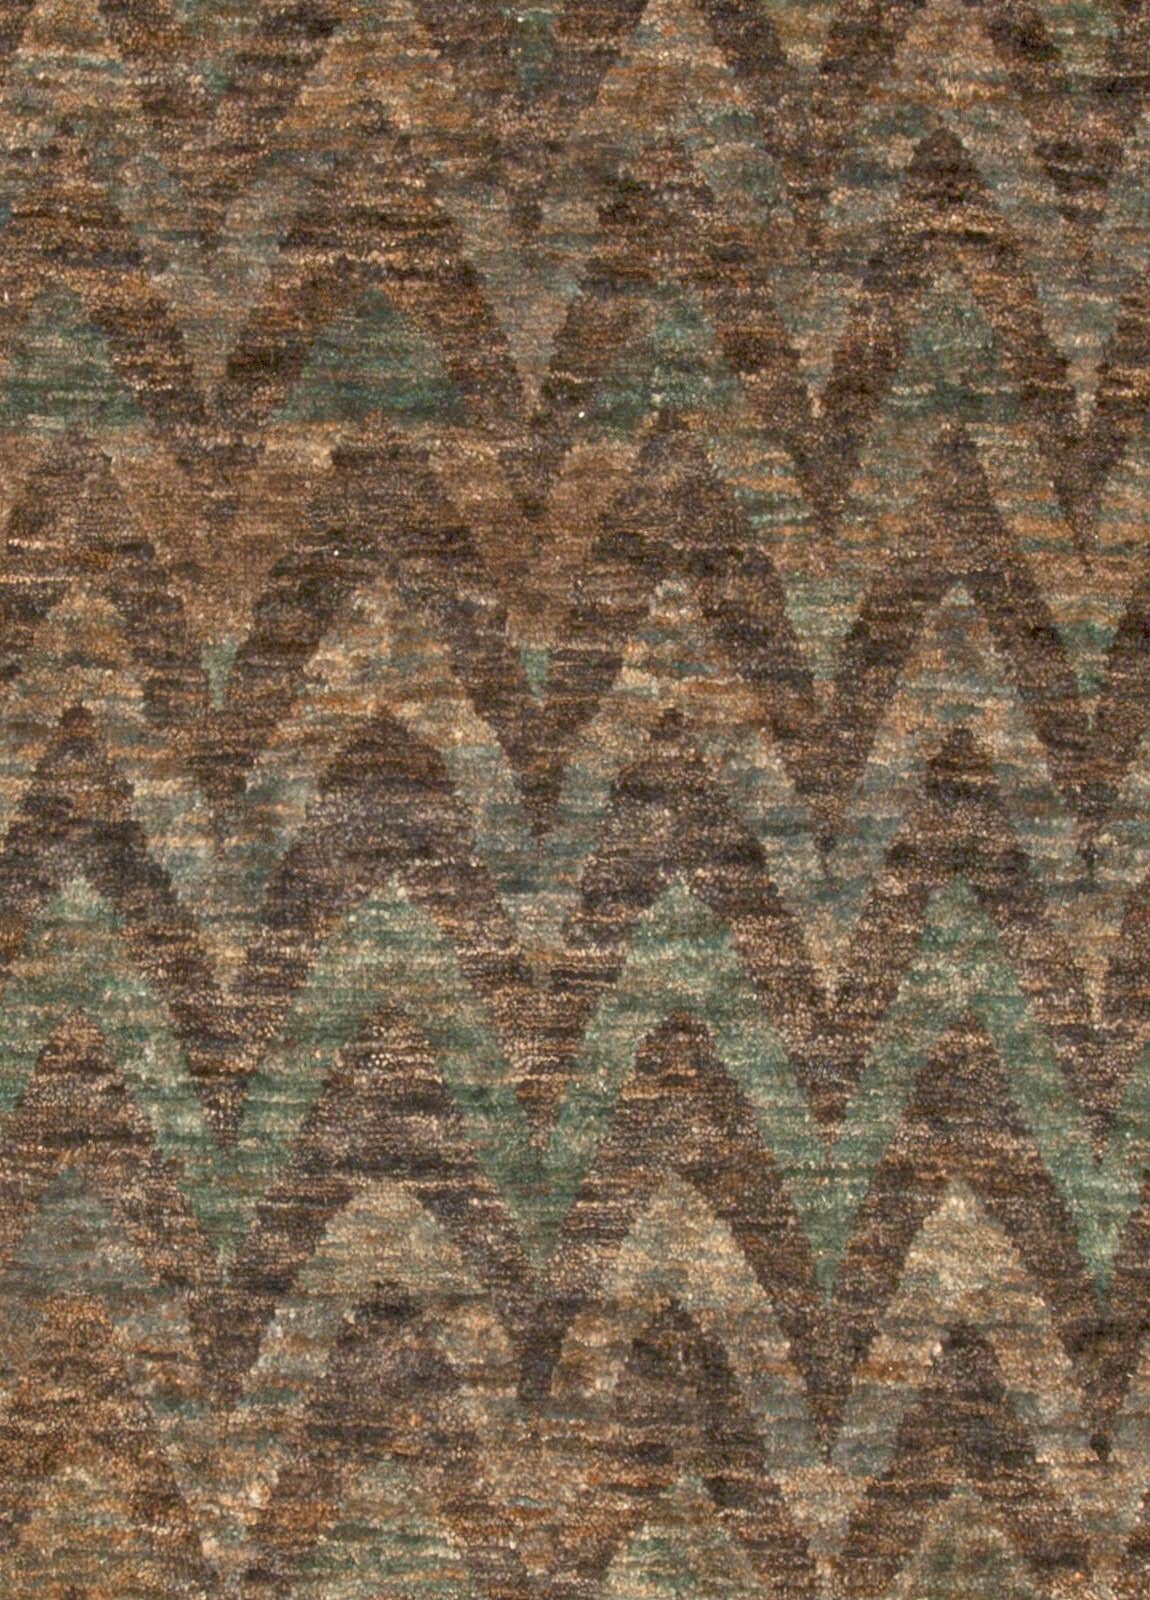 Contemporary ikat rainbow handmade wool rug by Doris Leslie Blau.
Size: 12'10